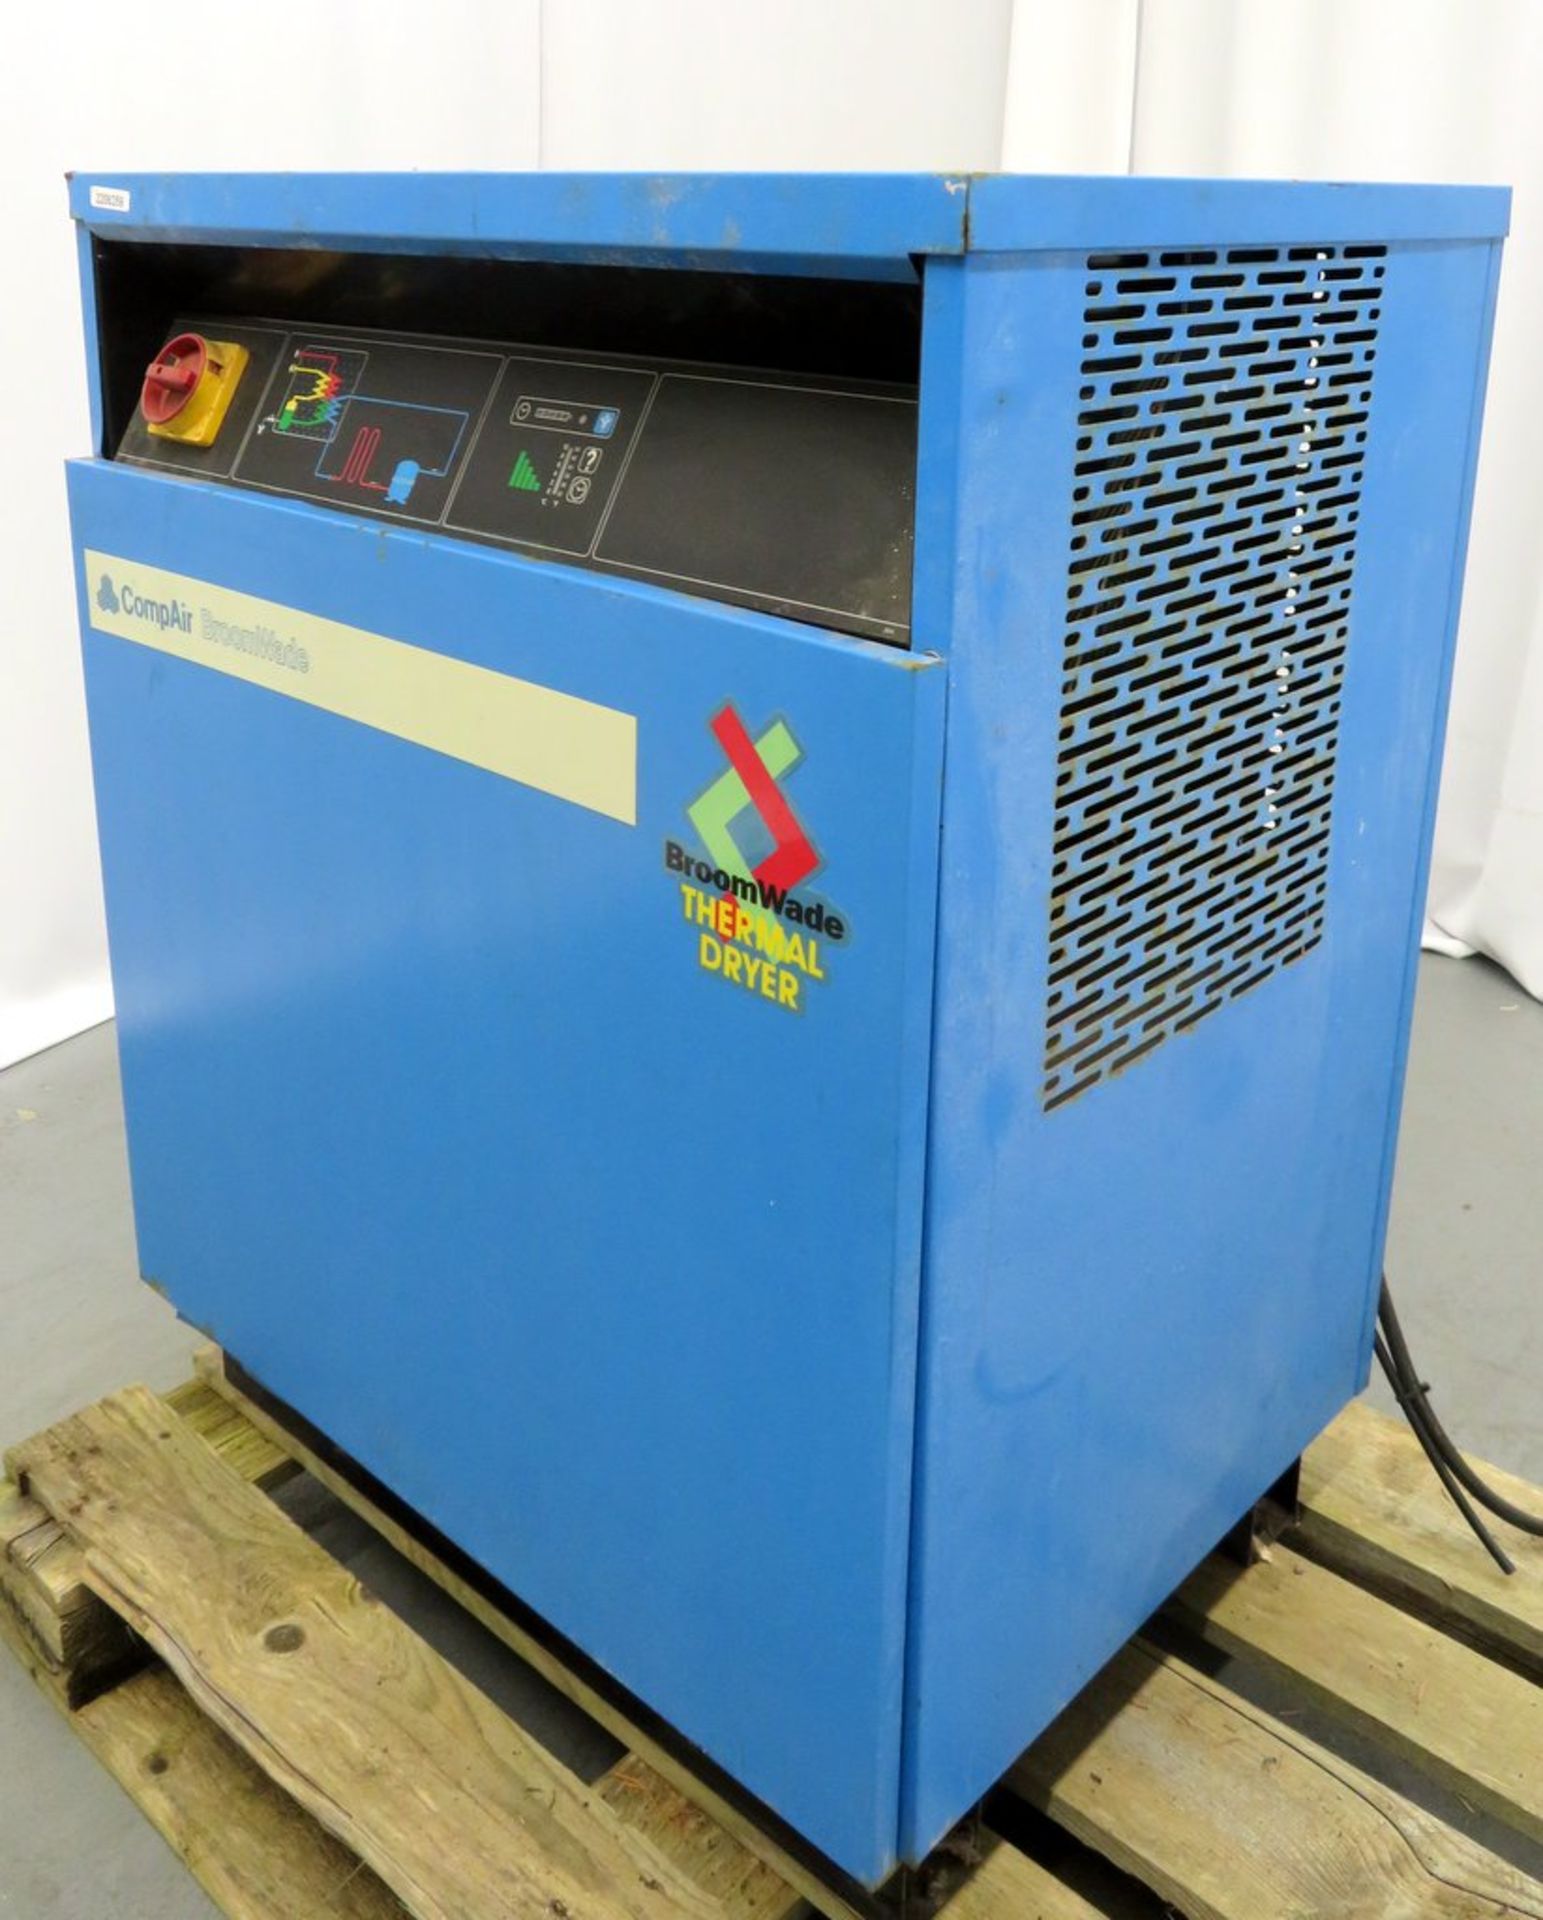 Compair Broomwade BTD1250 thermal dryer. - Image 3 of 12